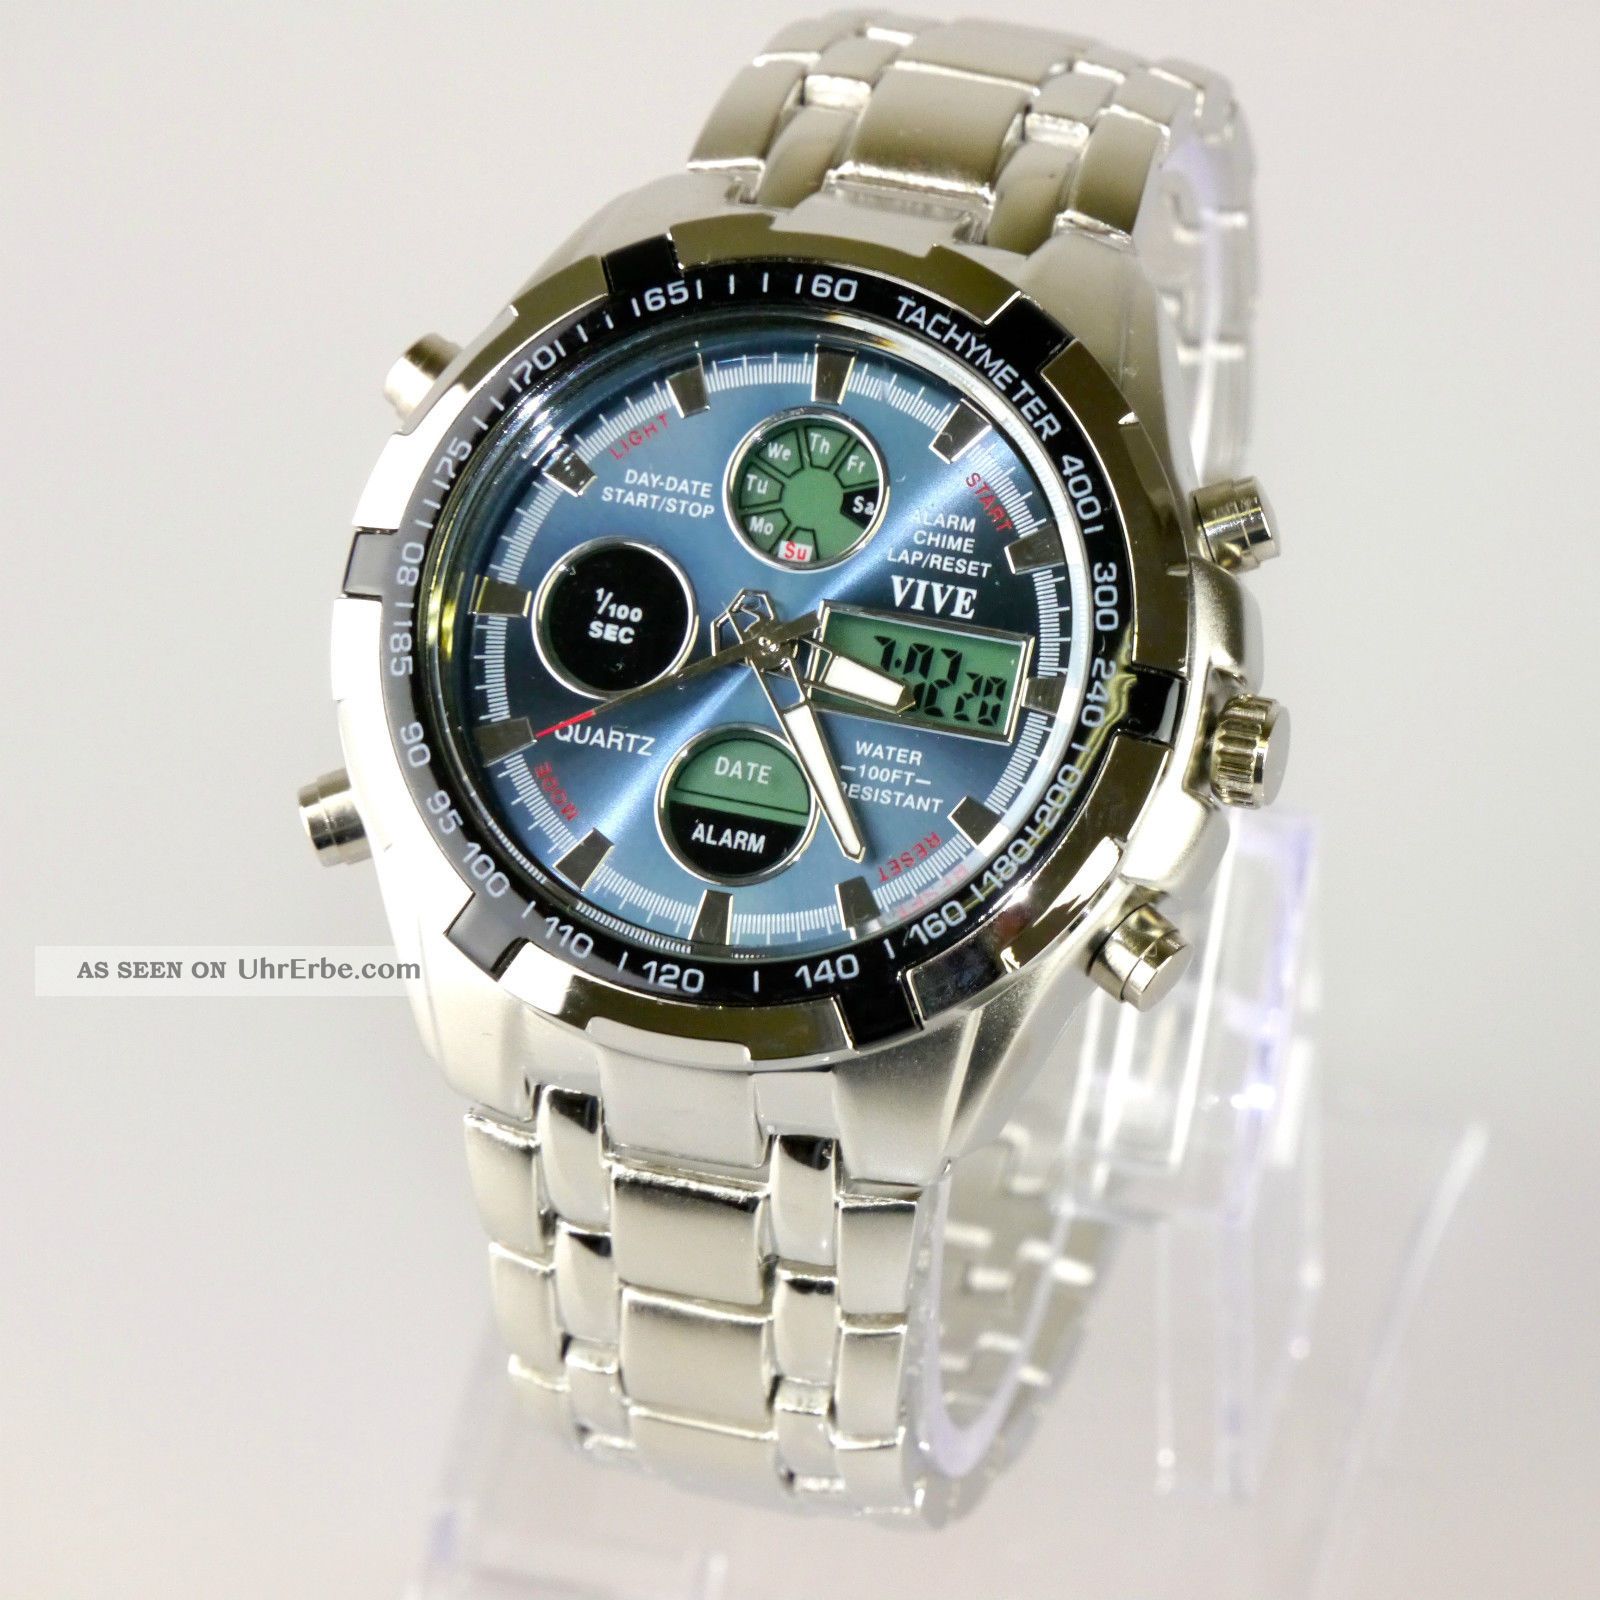 Herren Vive Armband Uhr Edelstahl Massiv Silber Watch Analog Digital Quarz Armbanduhren Bild